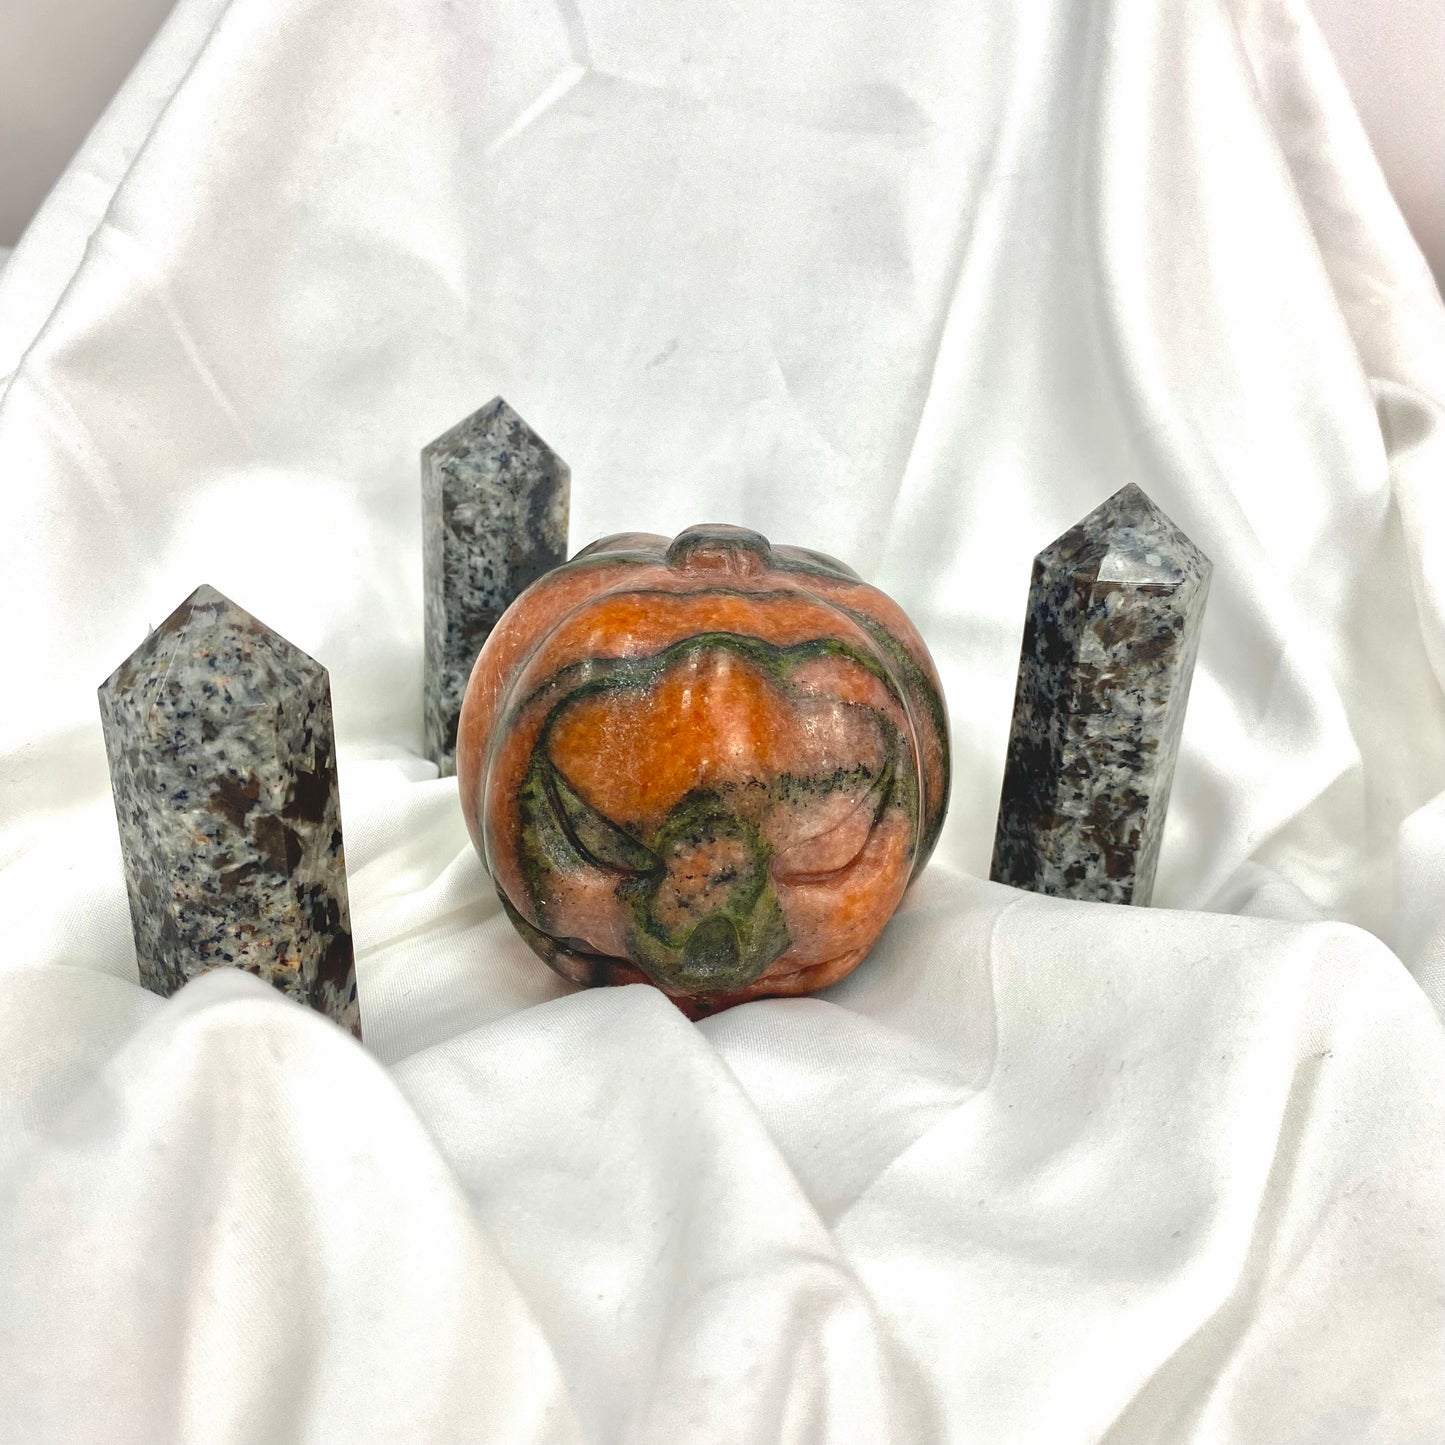 【A20】Orange Calcite Helloween Pumpkin Design Carving Set With Yooperlite Tower 4 In 1 Set